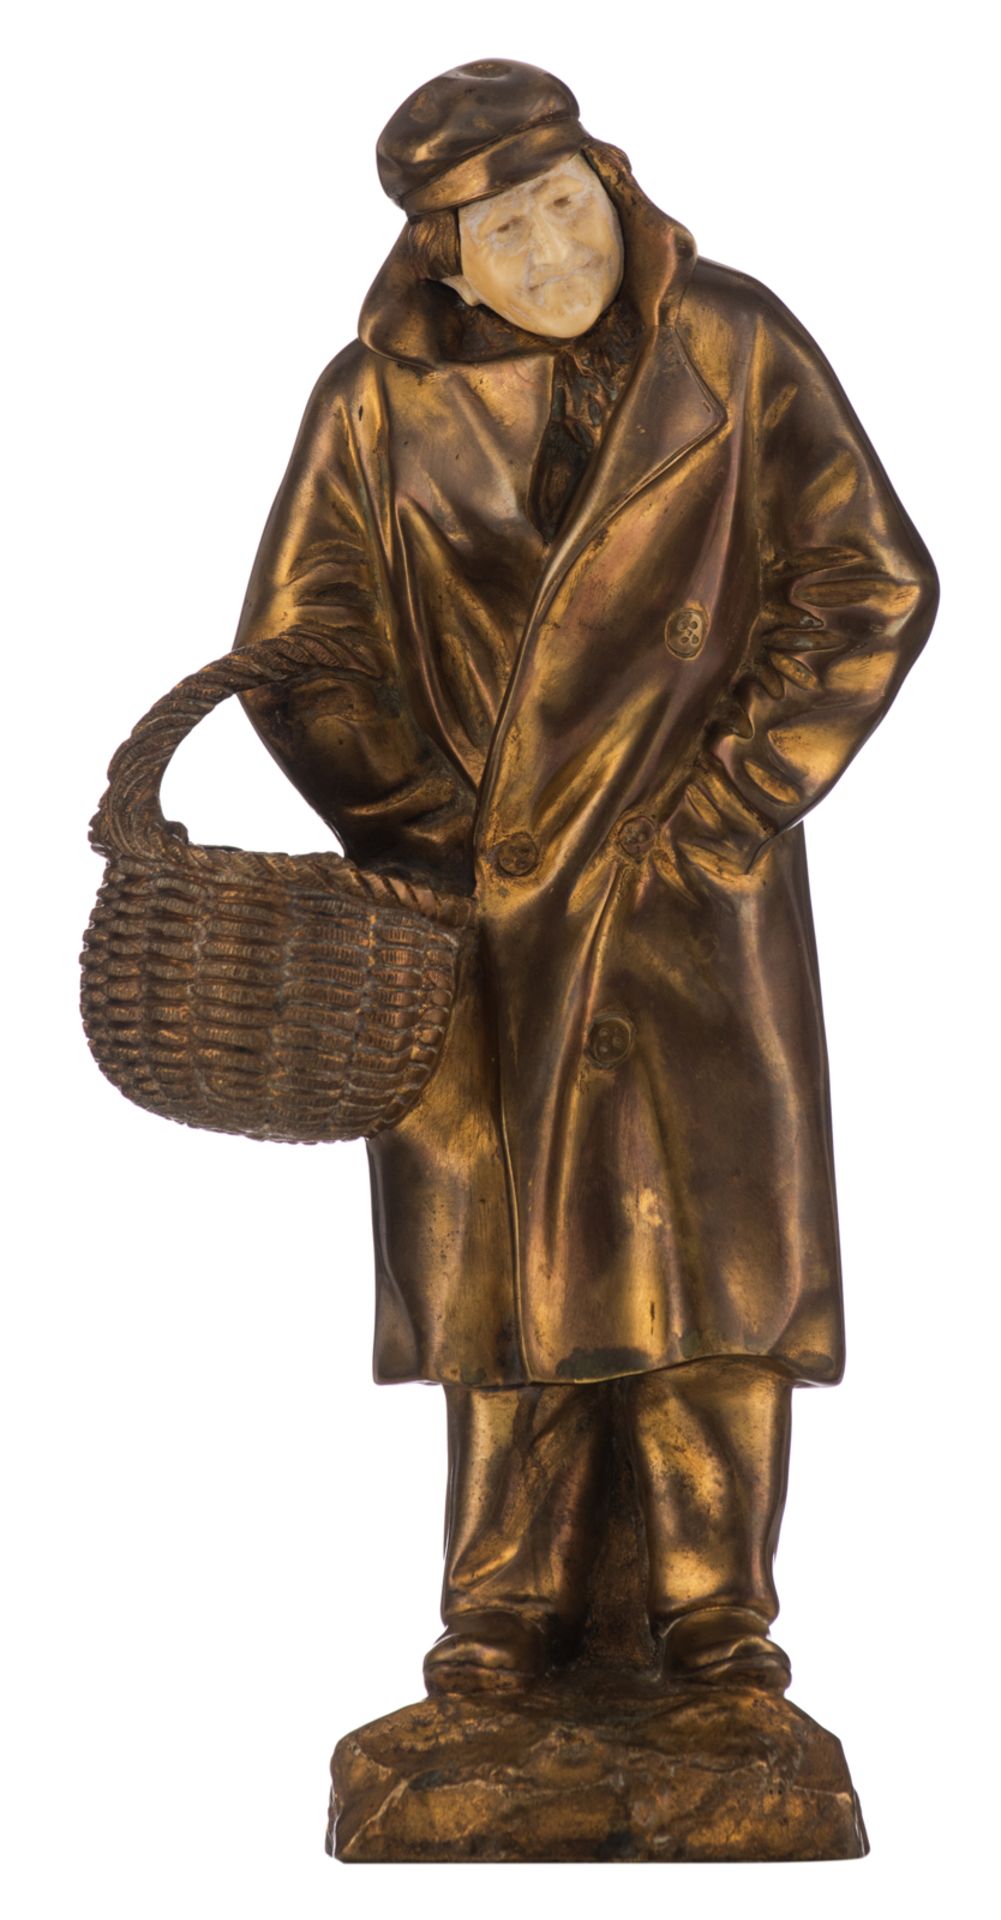 Secarel, 'man returning from the market', chryselephantine sculpture, H 30 cm